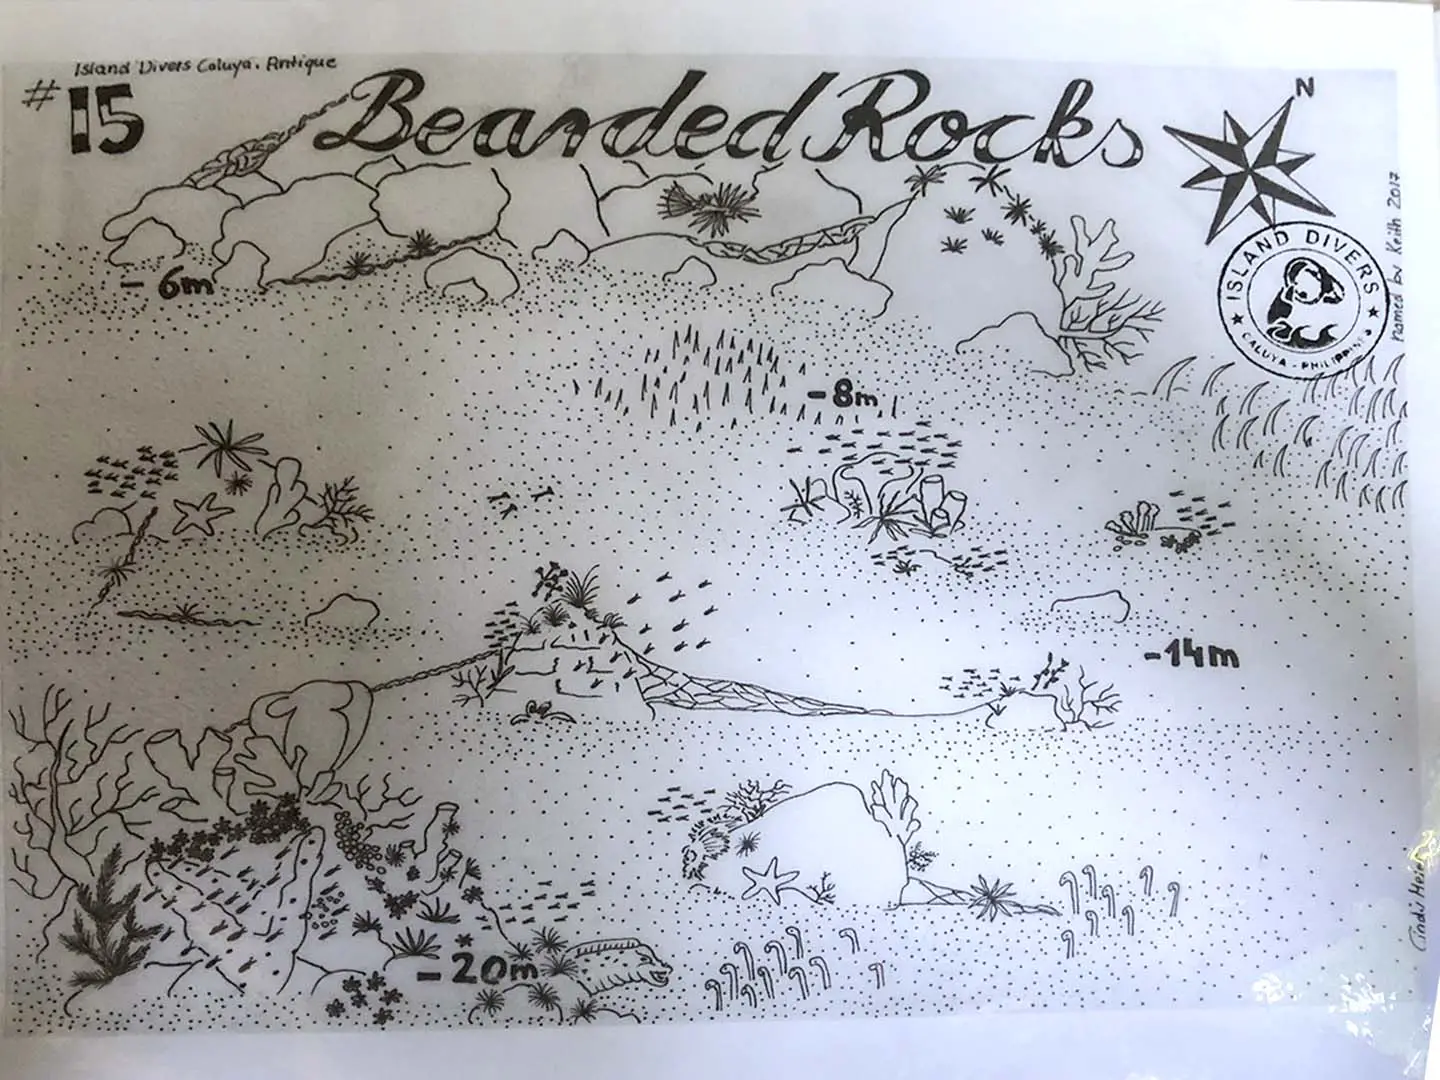 Caluya Island Bearded Rocks dive site drawing by Cindy